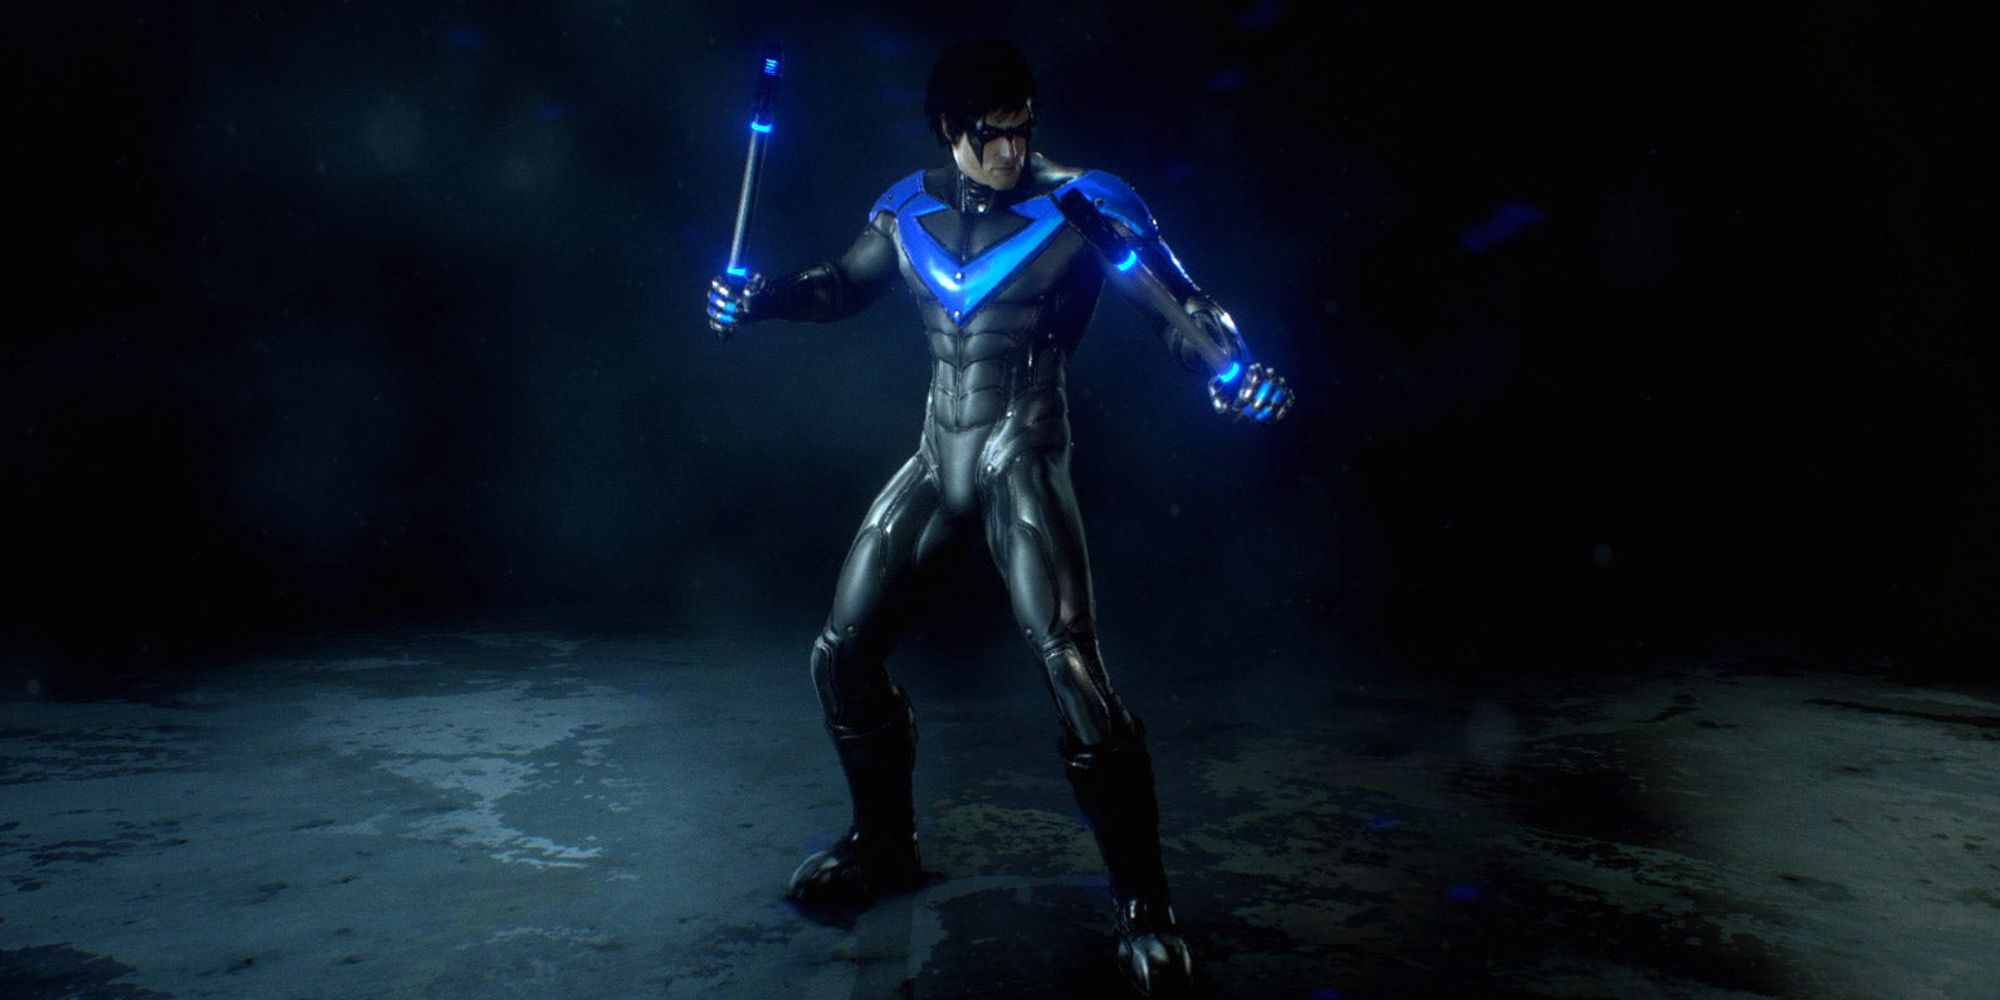 Nightwing in his Arkham City skin in Batman Arkham Knight